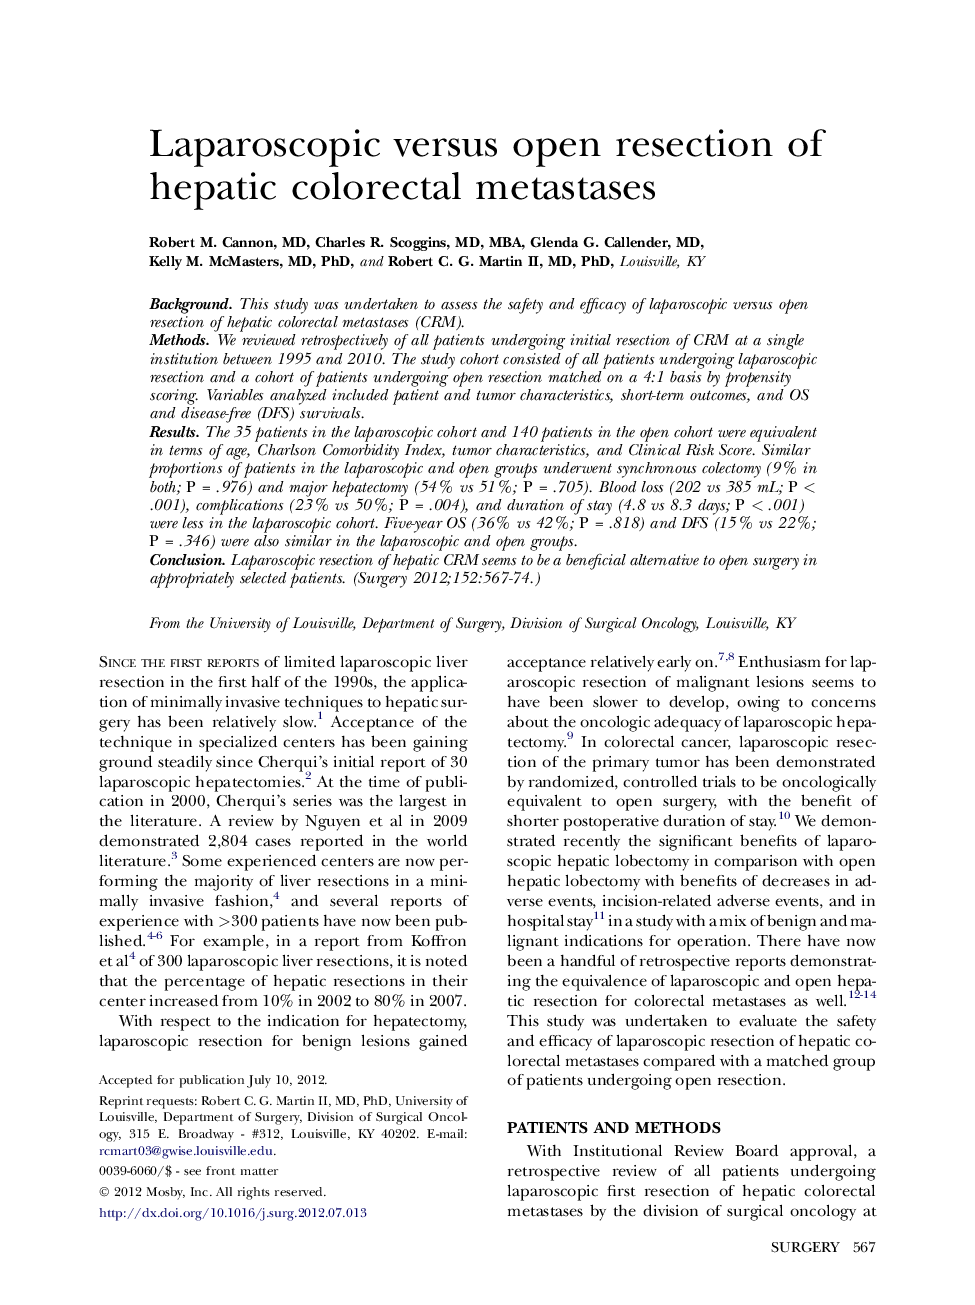 Laparoscopic versus open resection of hepatic colorectal metastases